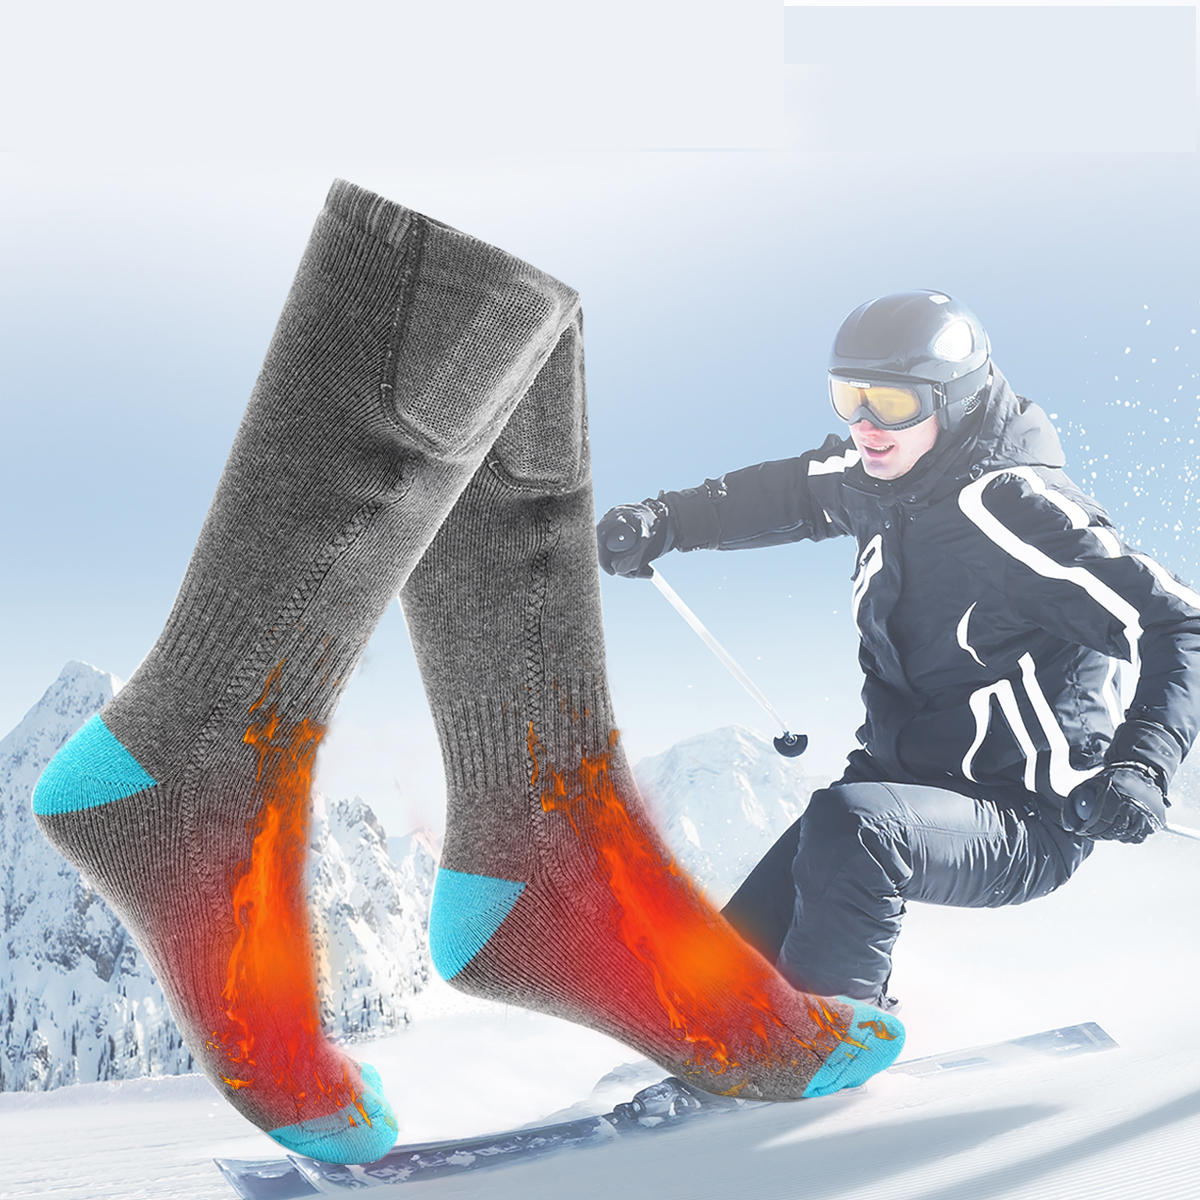 

Outdoor Sports Bike Skiing Socks Rechargeable Battery Electric Heated Socks Winter Boot Feet Warmer